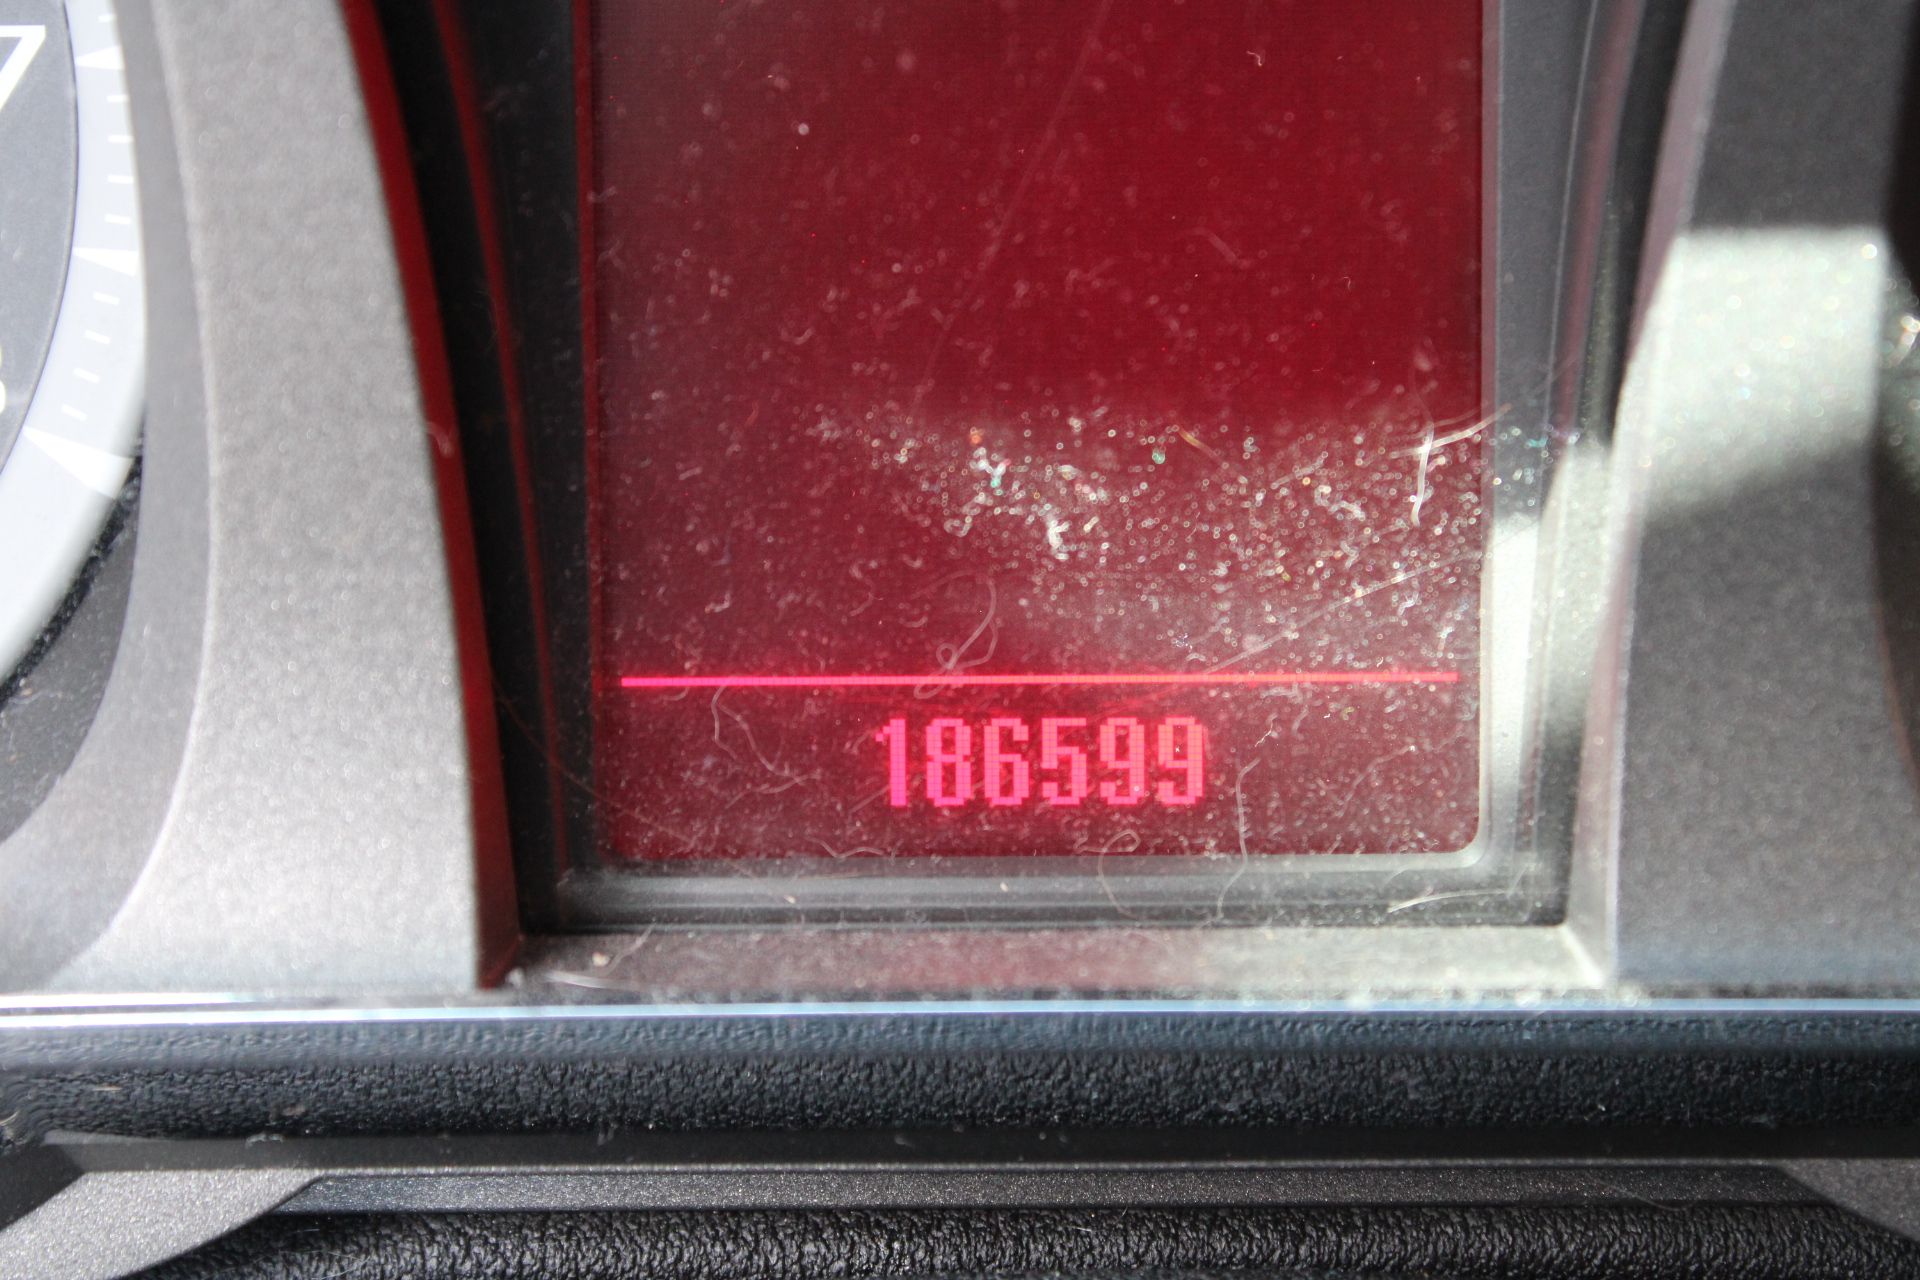 2010 GMC TERRAIN SLE2 SUV, 2.4L L4, FWD, VIN 2CTALDEW1A6287149, 186,599 MILES - Image 10 of 11